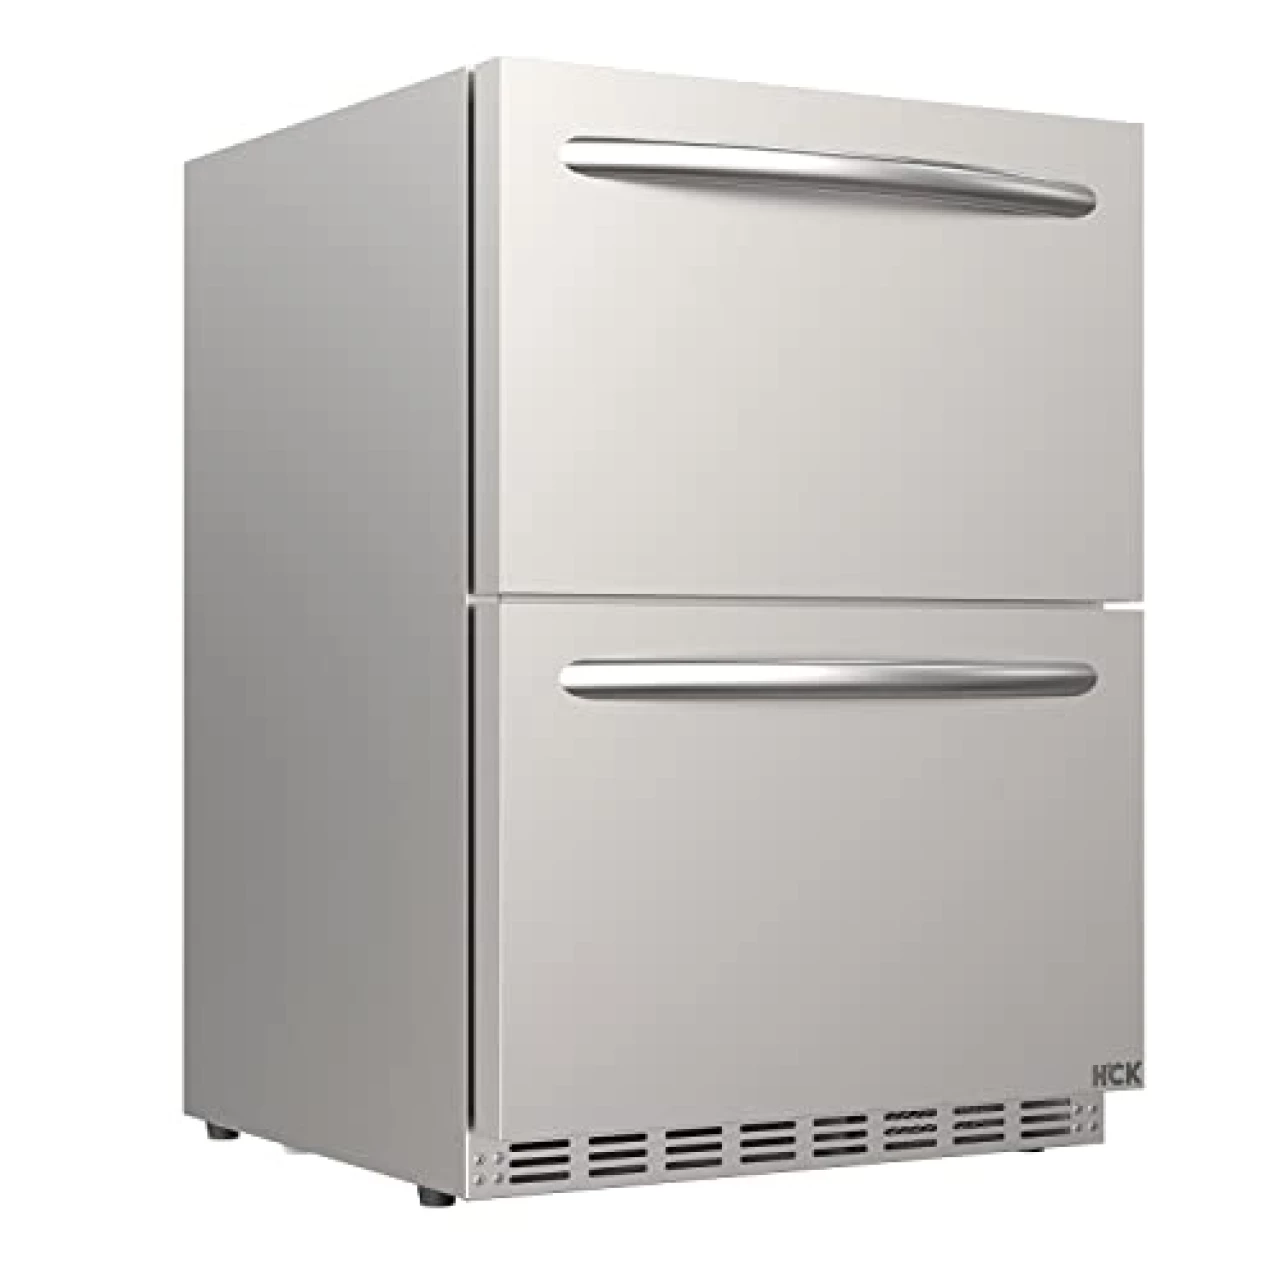 HCK Undercounter Refrigerator